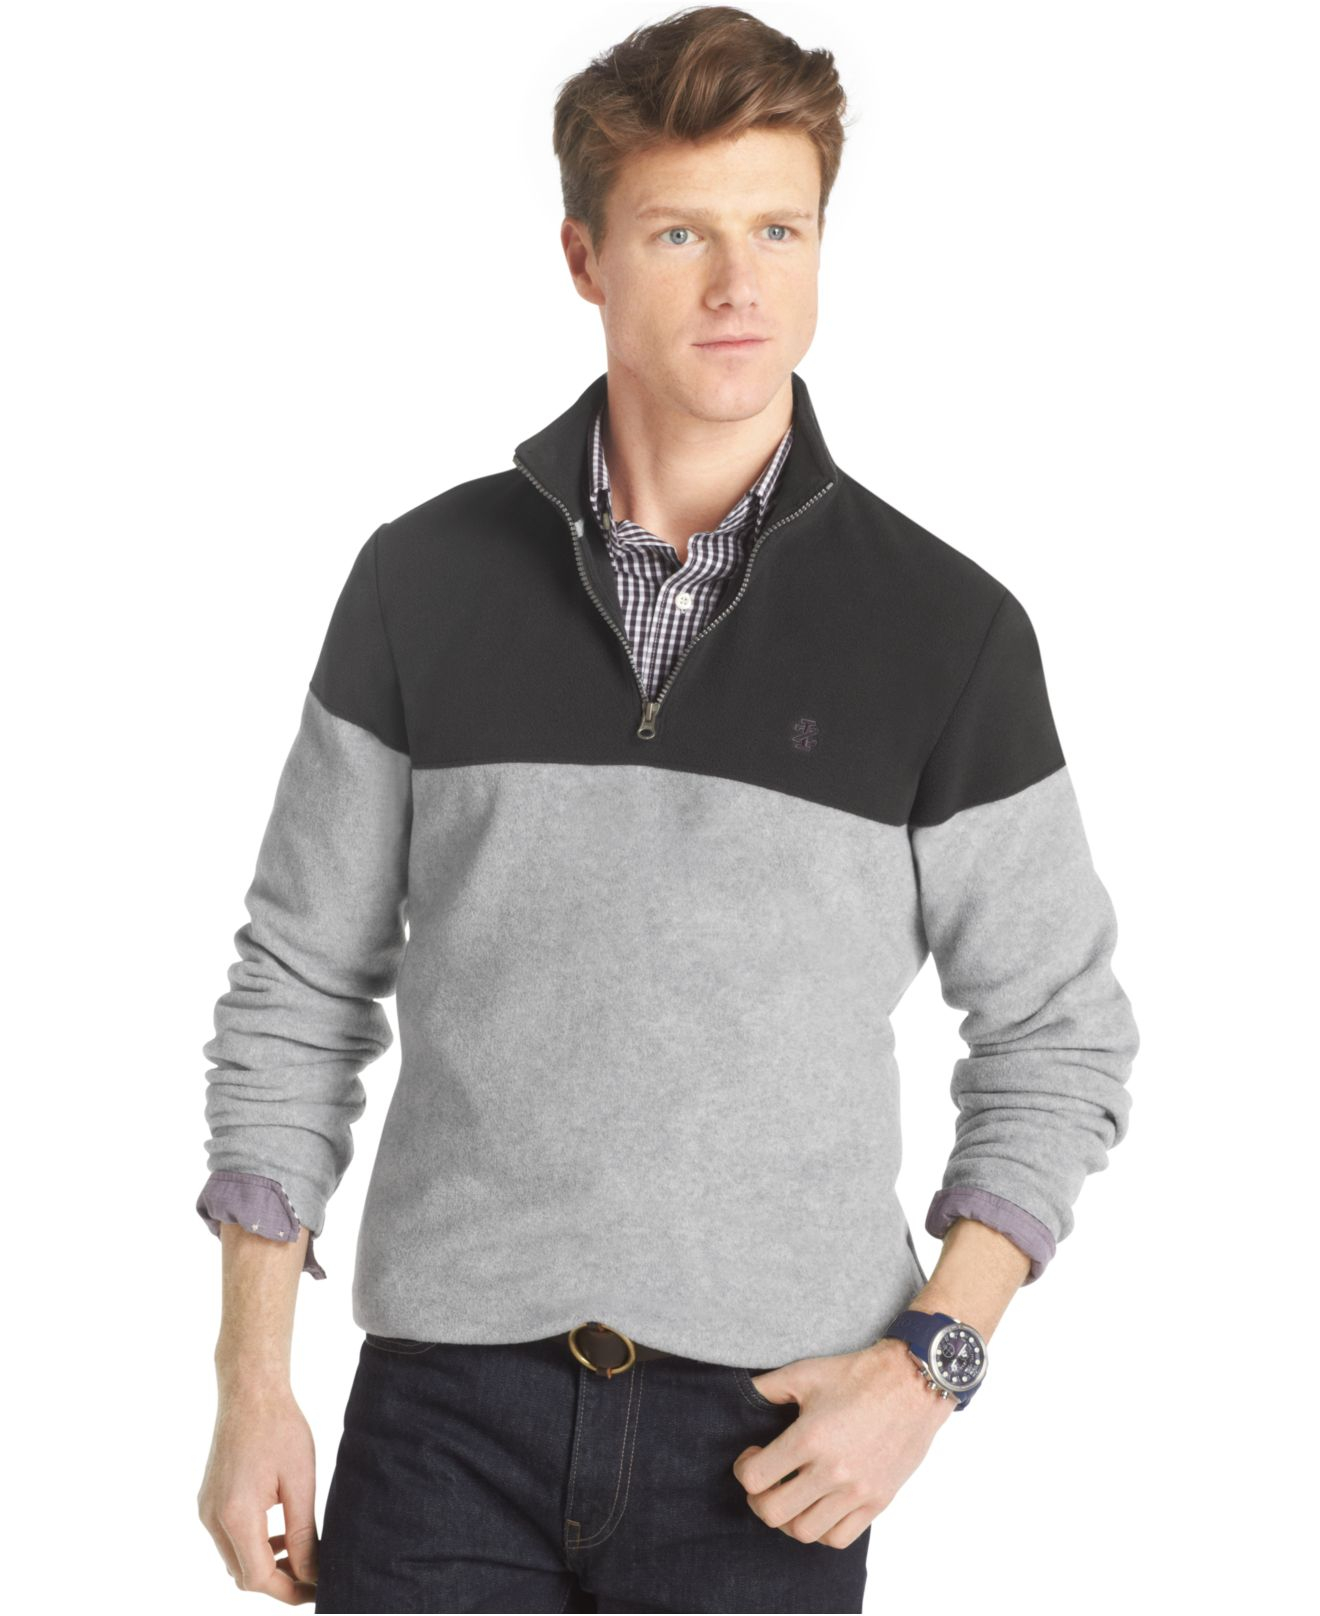 Lyst - Izod Colorblocked Polar-Fleece Quarter-Zip Sweater in Black for Men